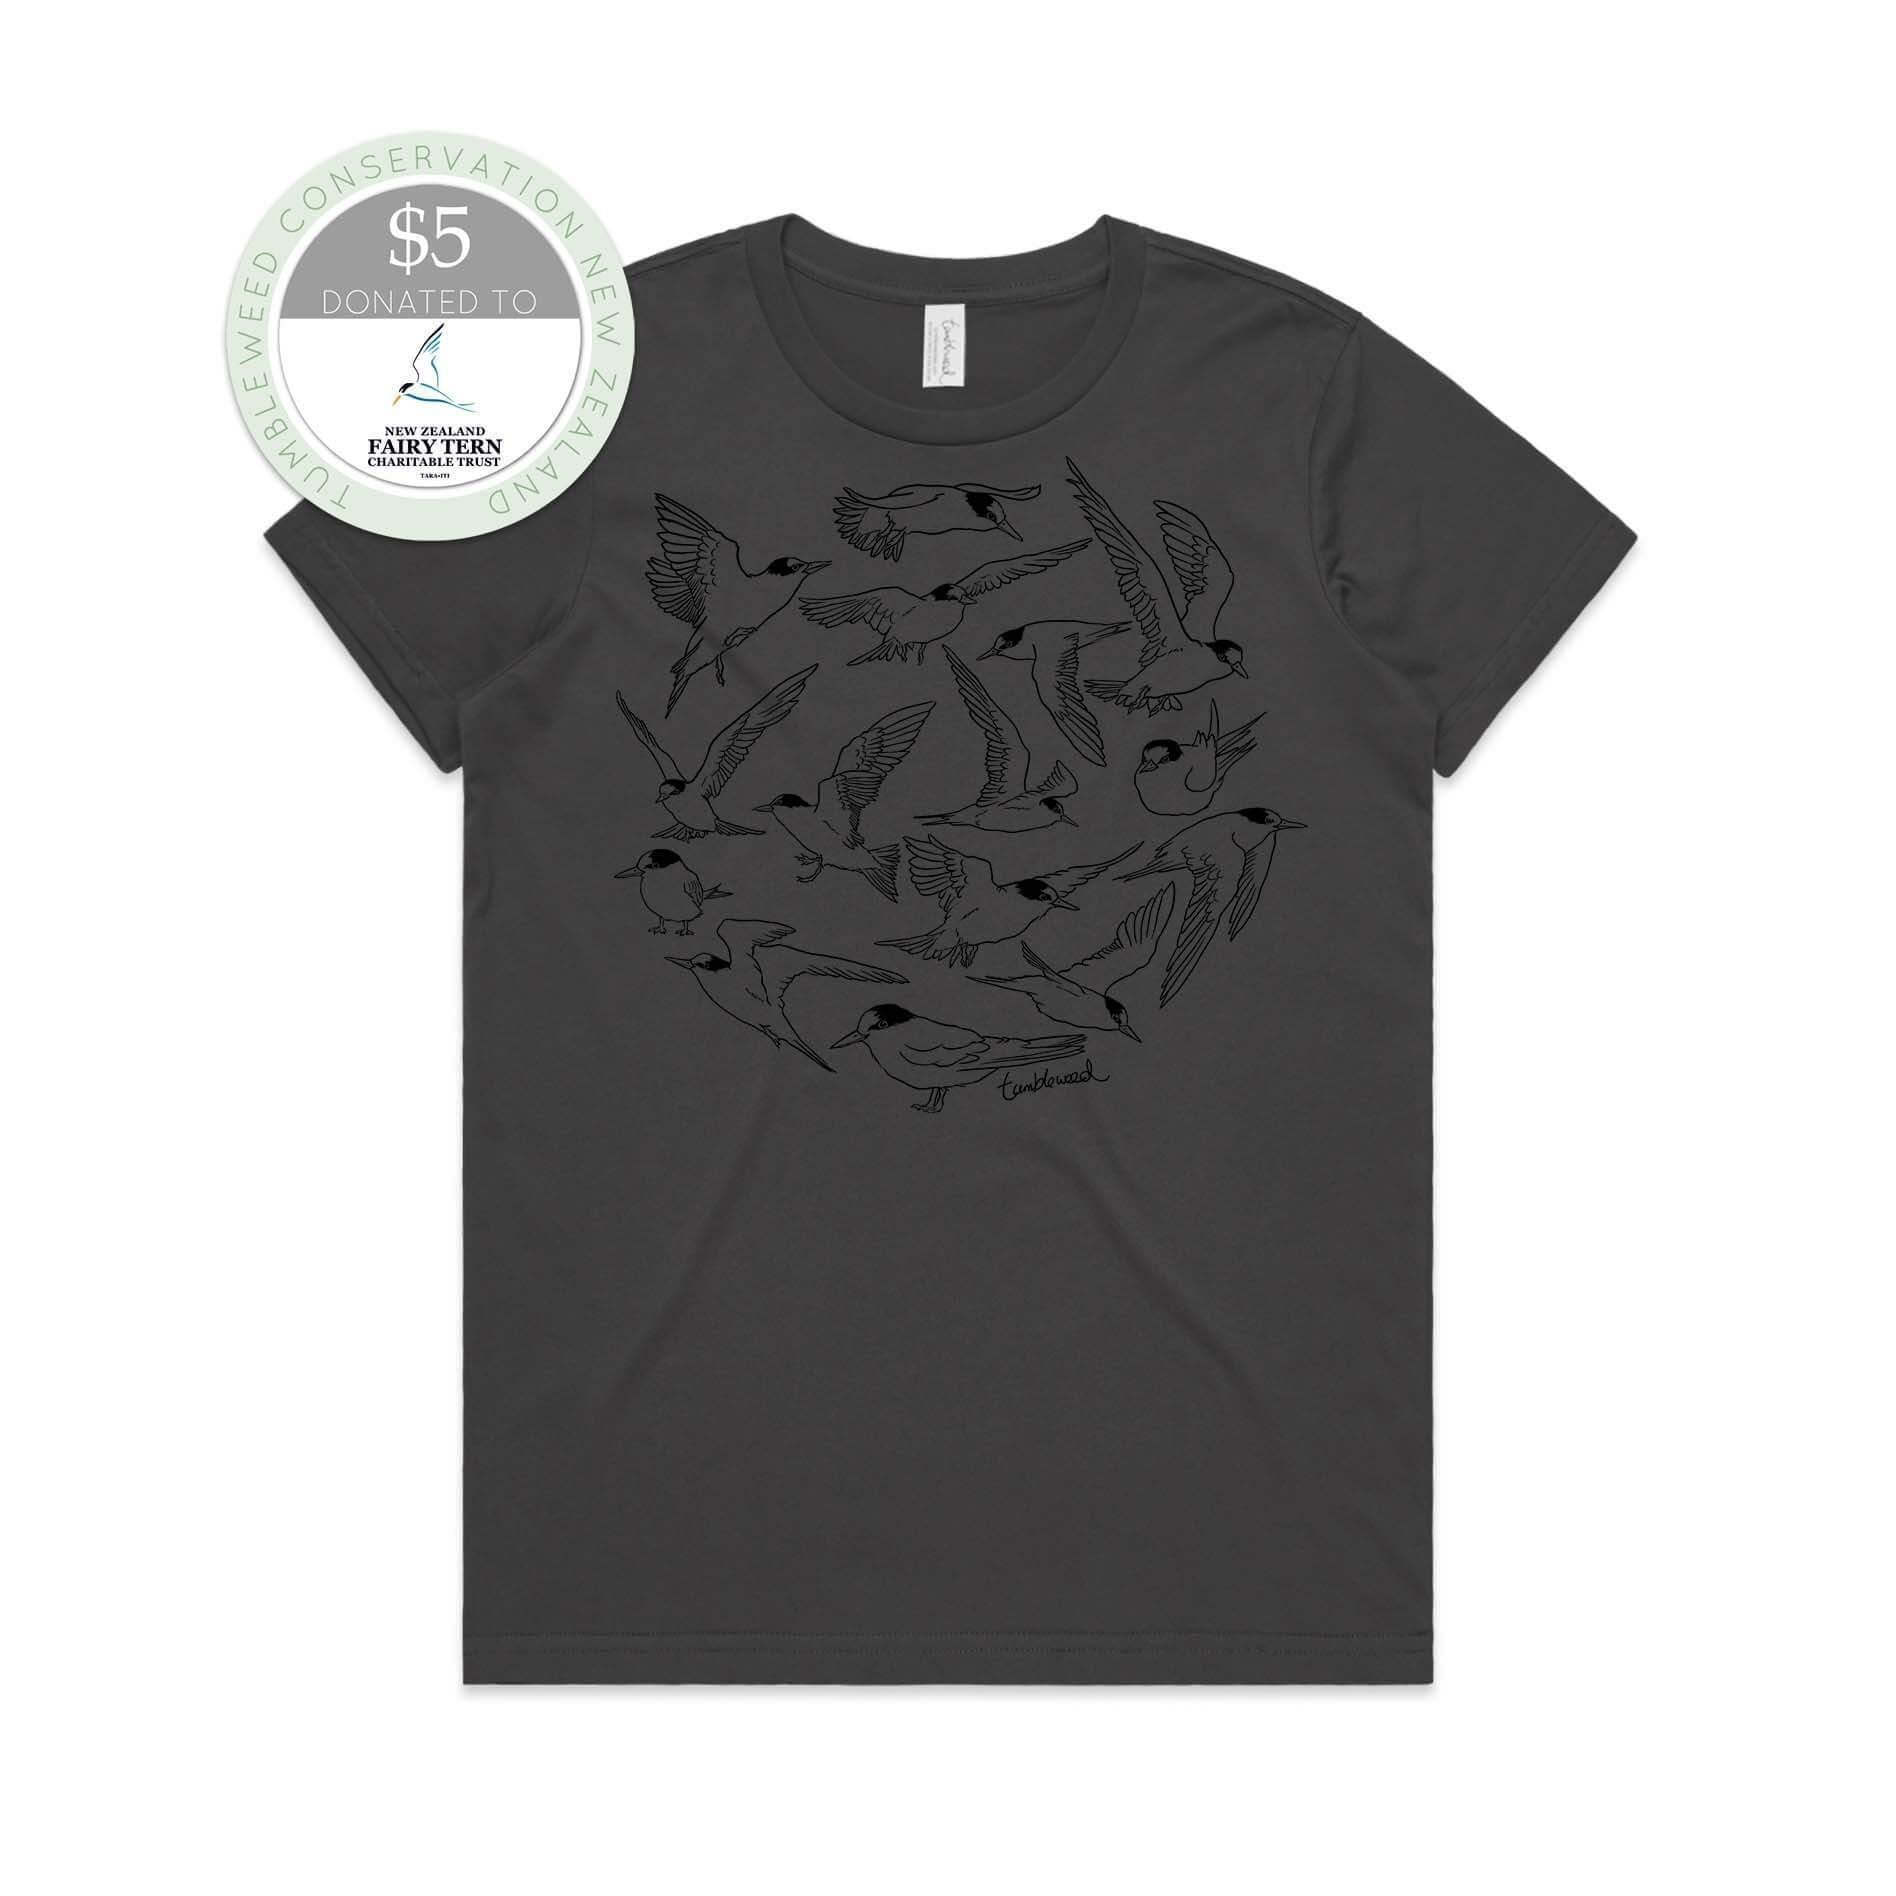 Charcoal, female t-shirt featuring a screen printed fairy tern/tara iti design.